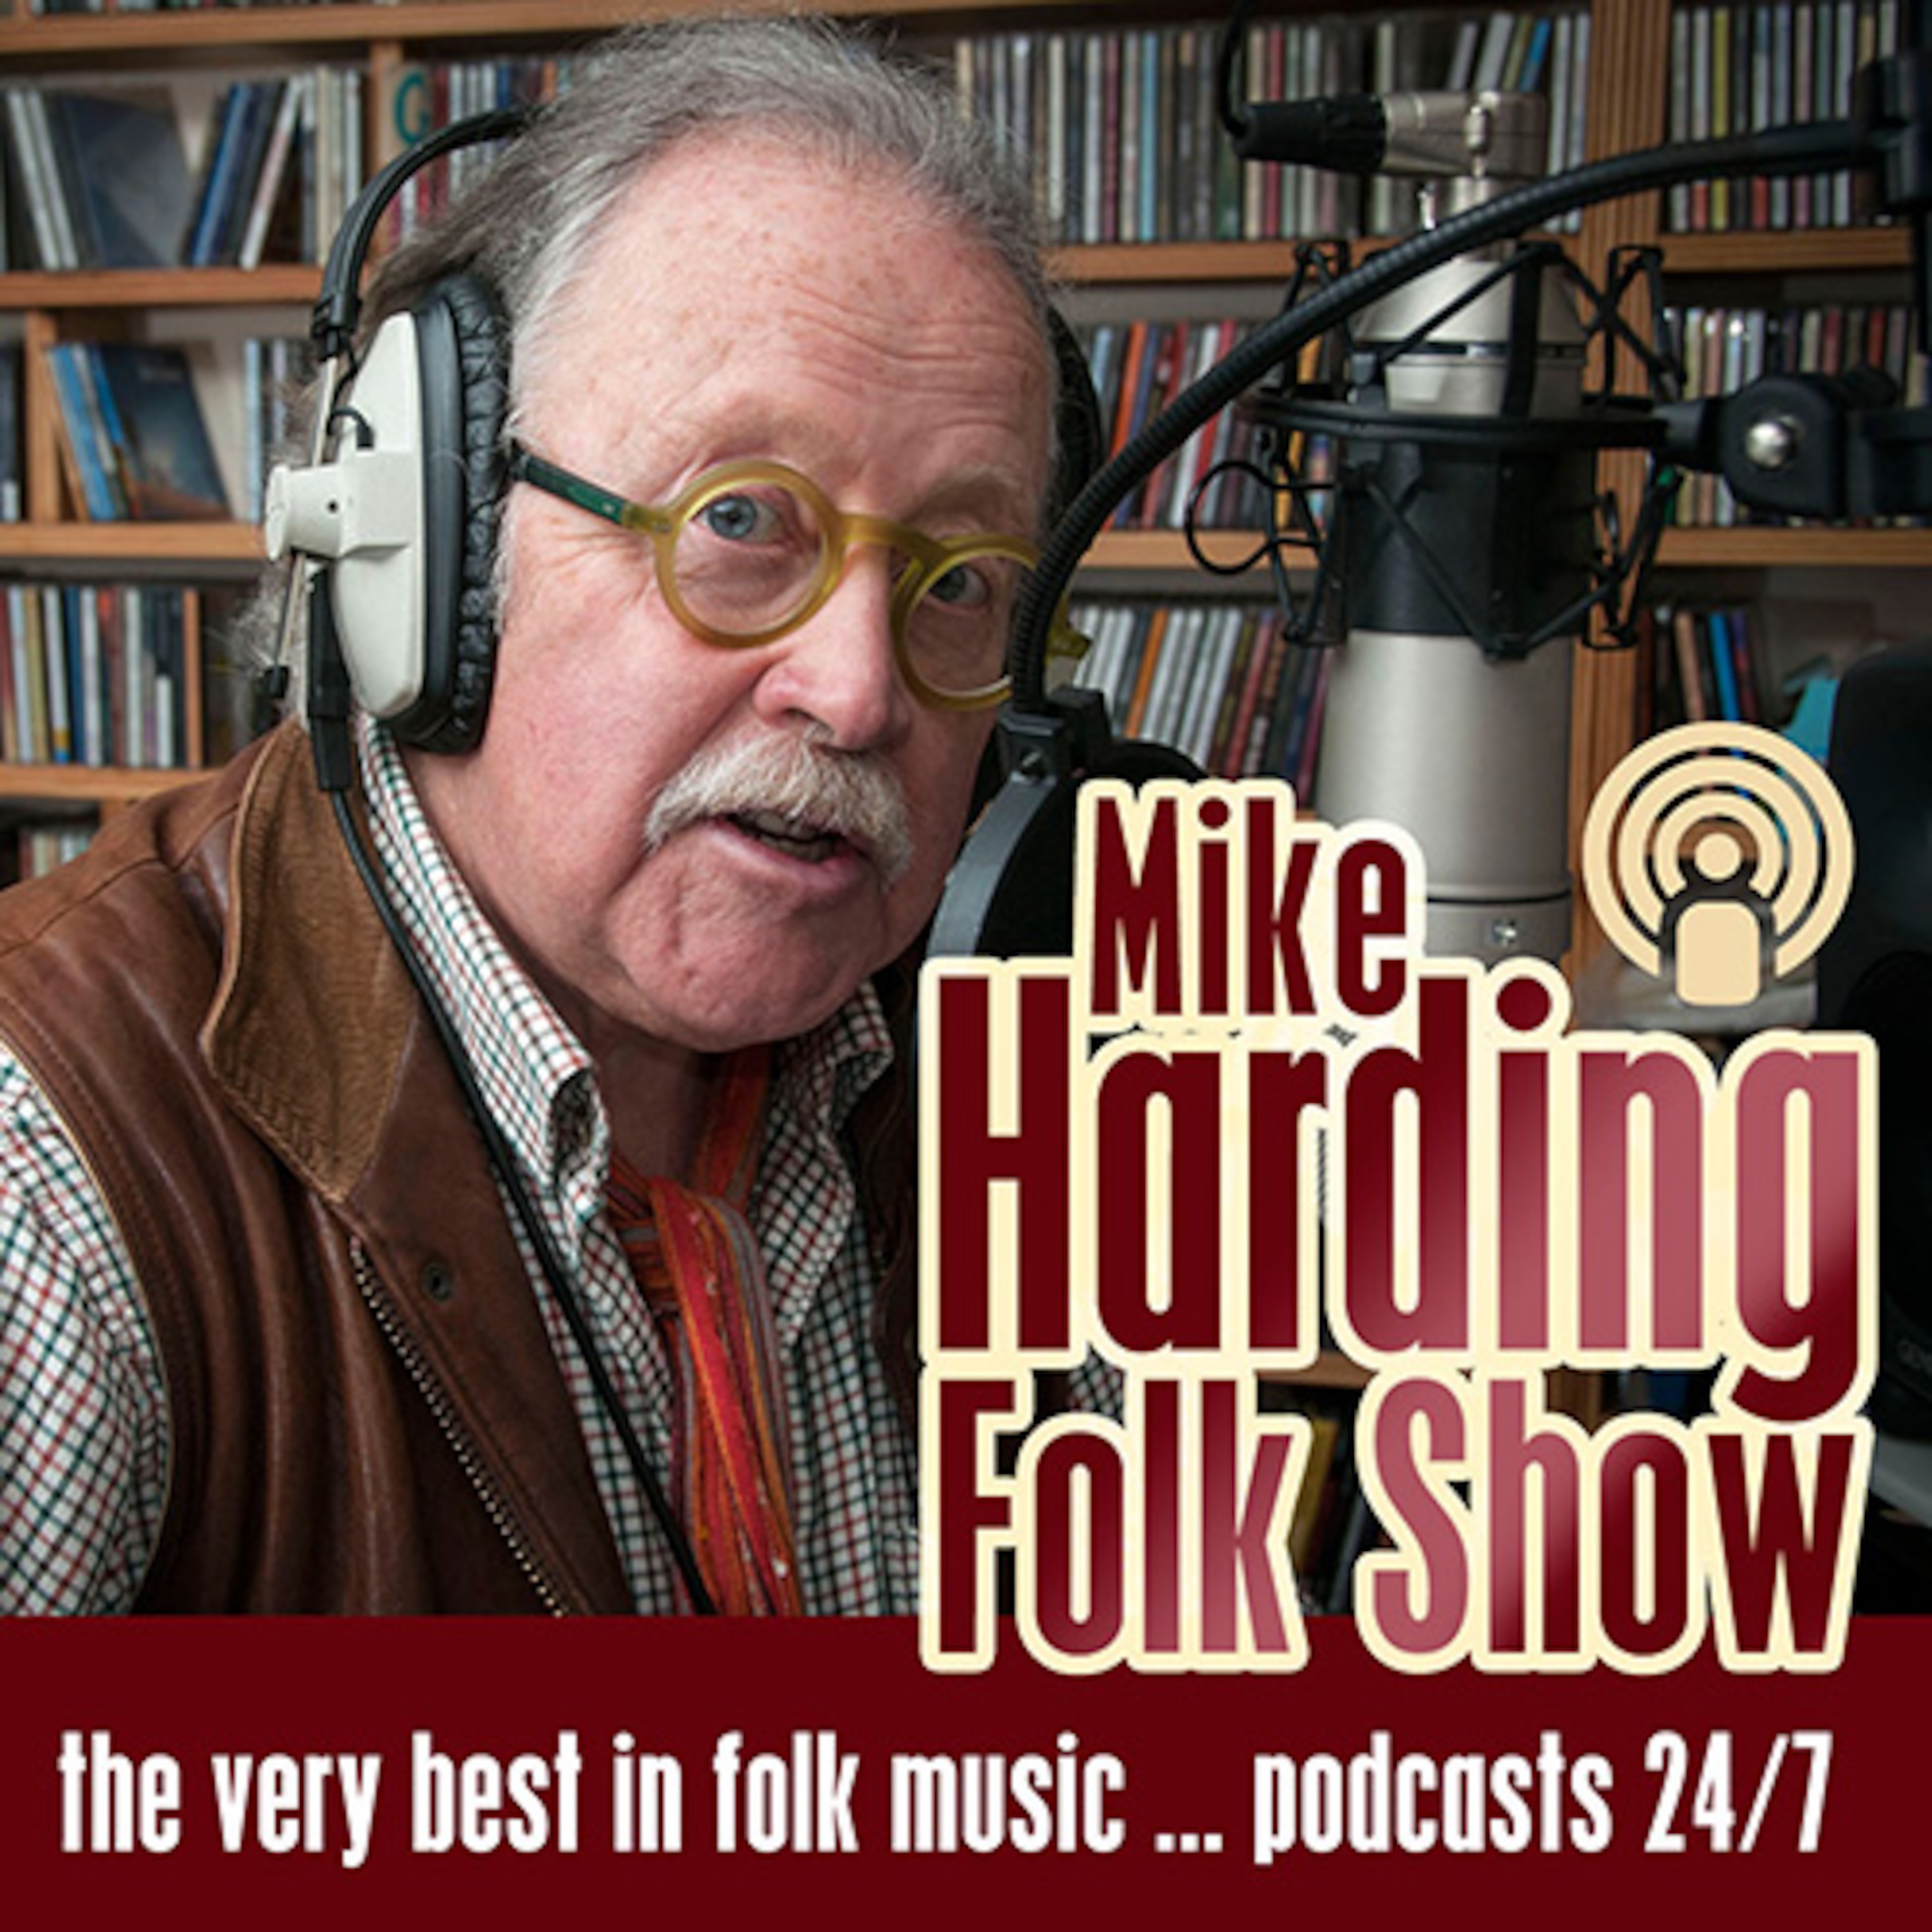 Mike Harding Folk Show 119